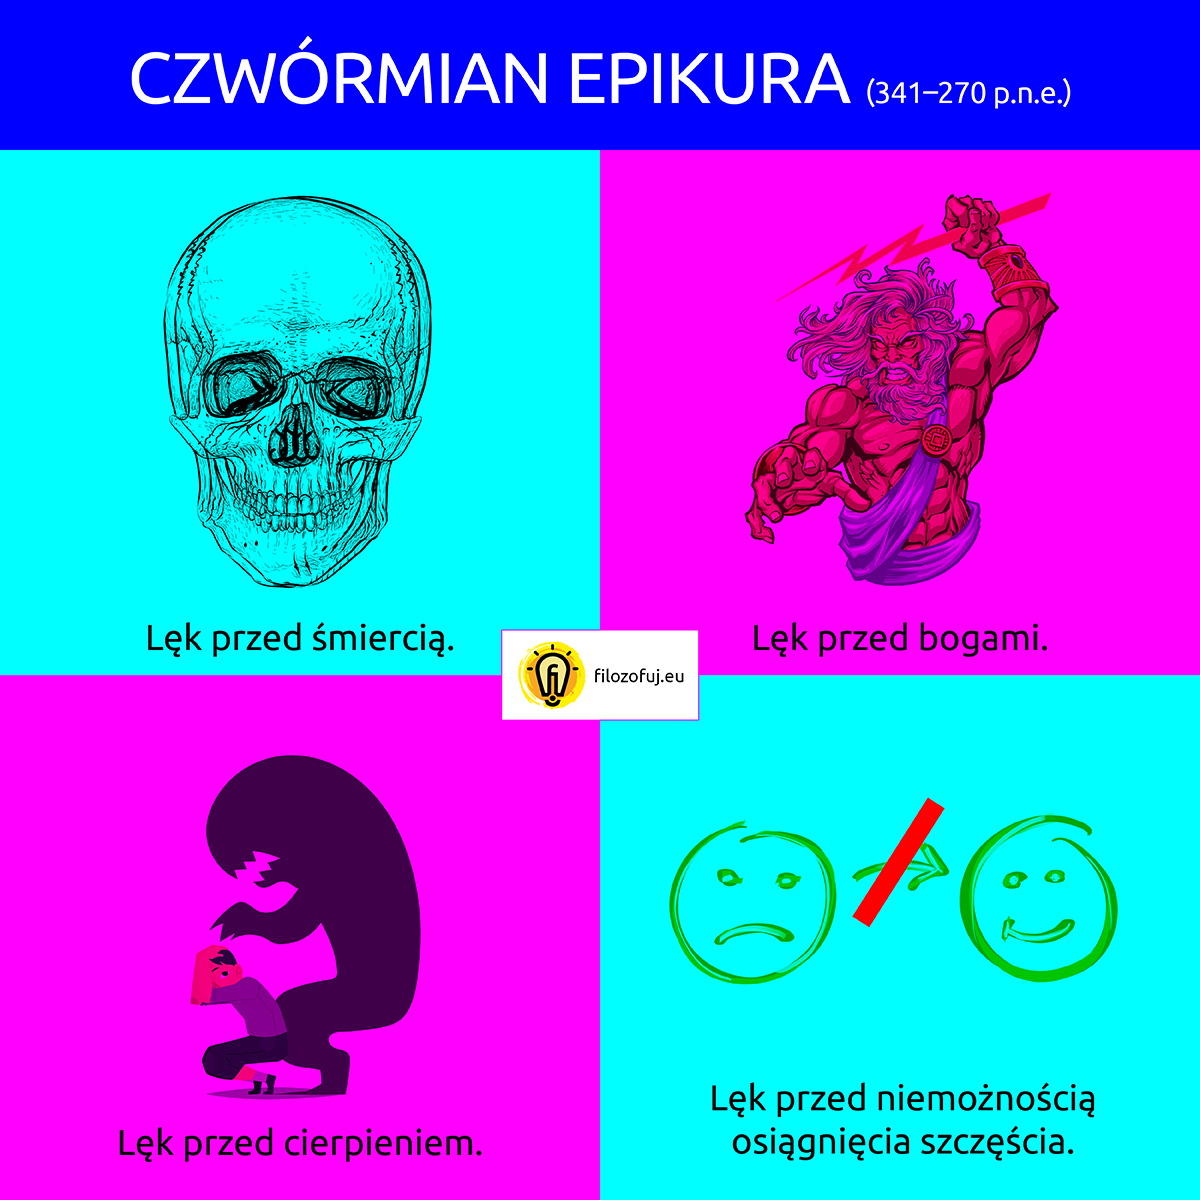 czwormian-epikura2